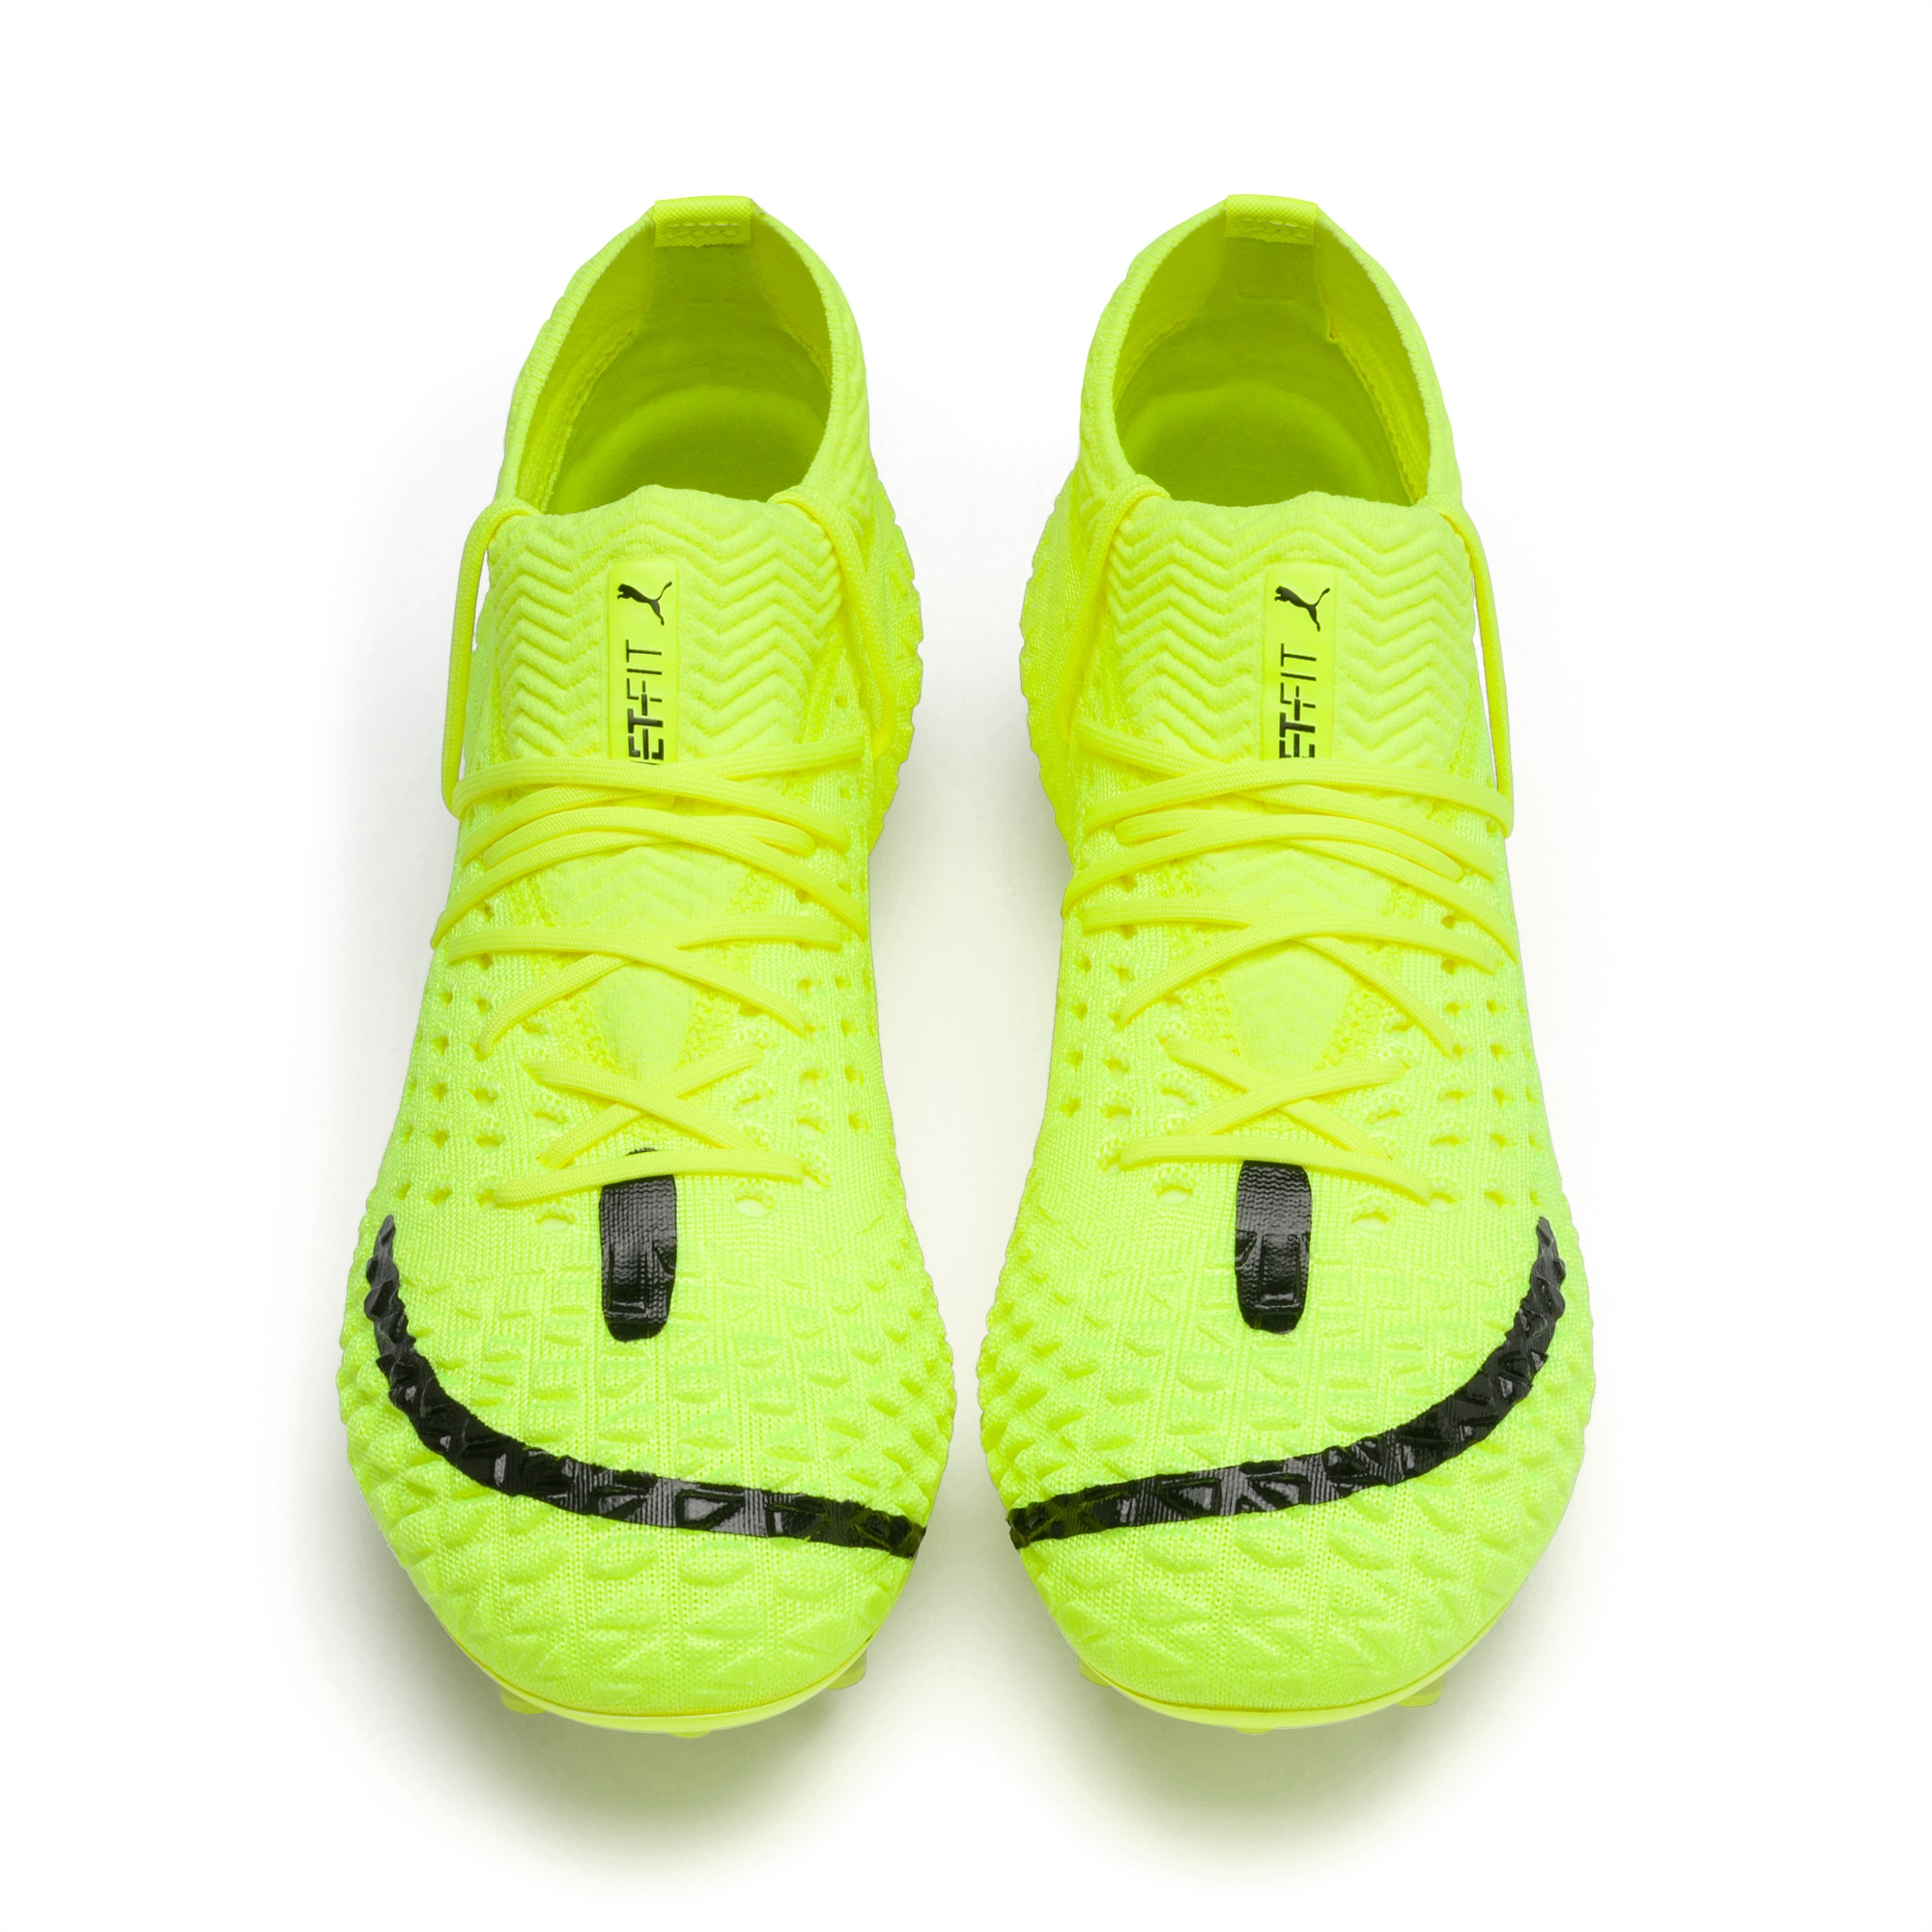 FUTURE 4.1 NETFIT Griezmann FG/AG Men's Football Boots | PUMA Shoes | PUMA  España